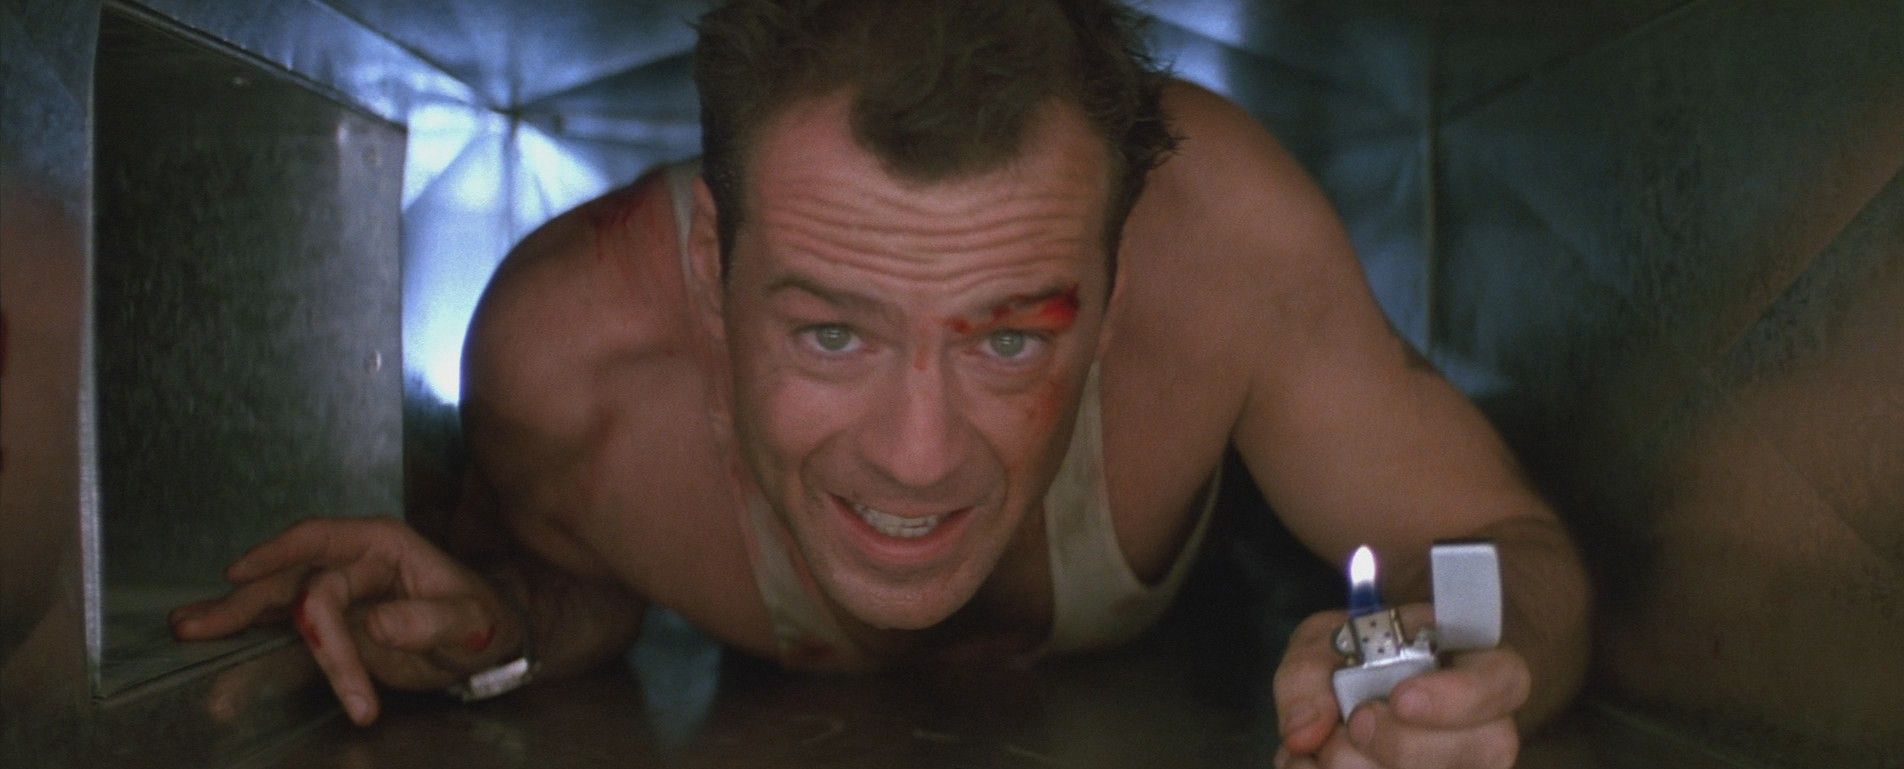 Bruce Willis as John McClane in Die Hard crawling through the vent